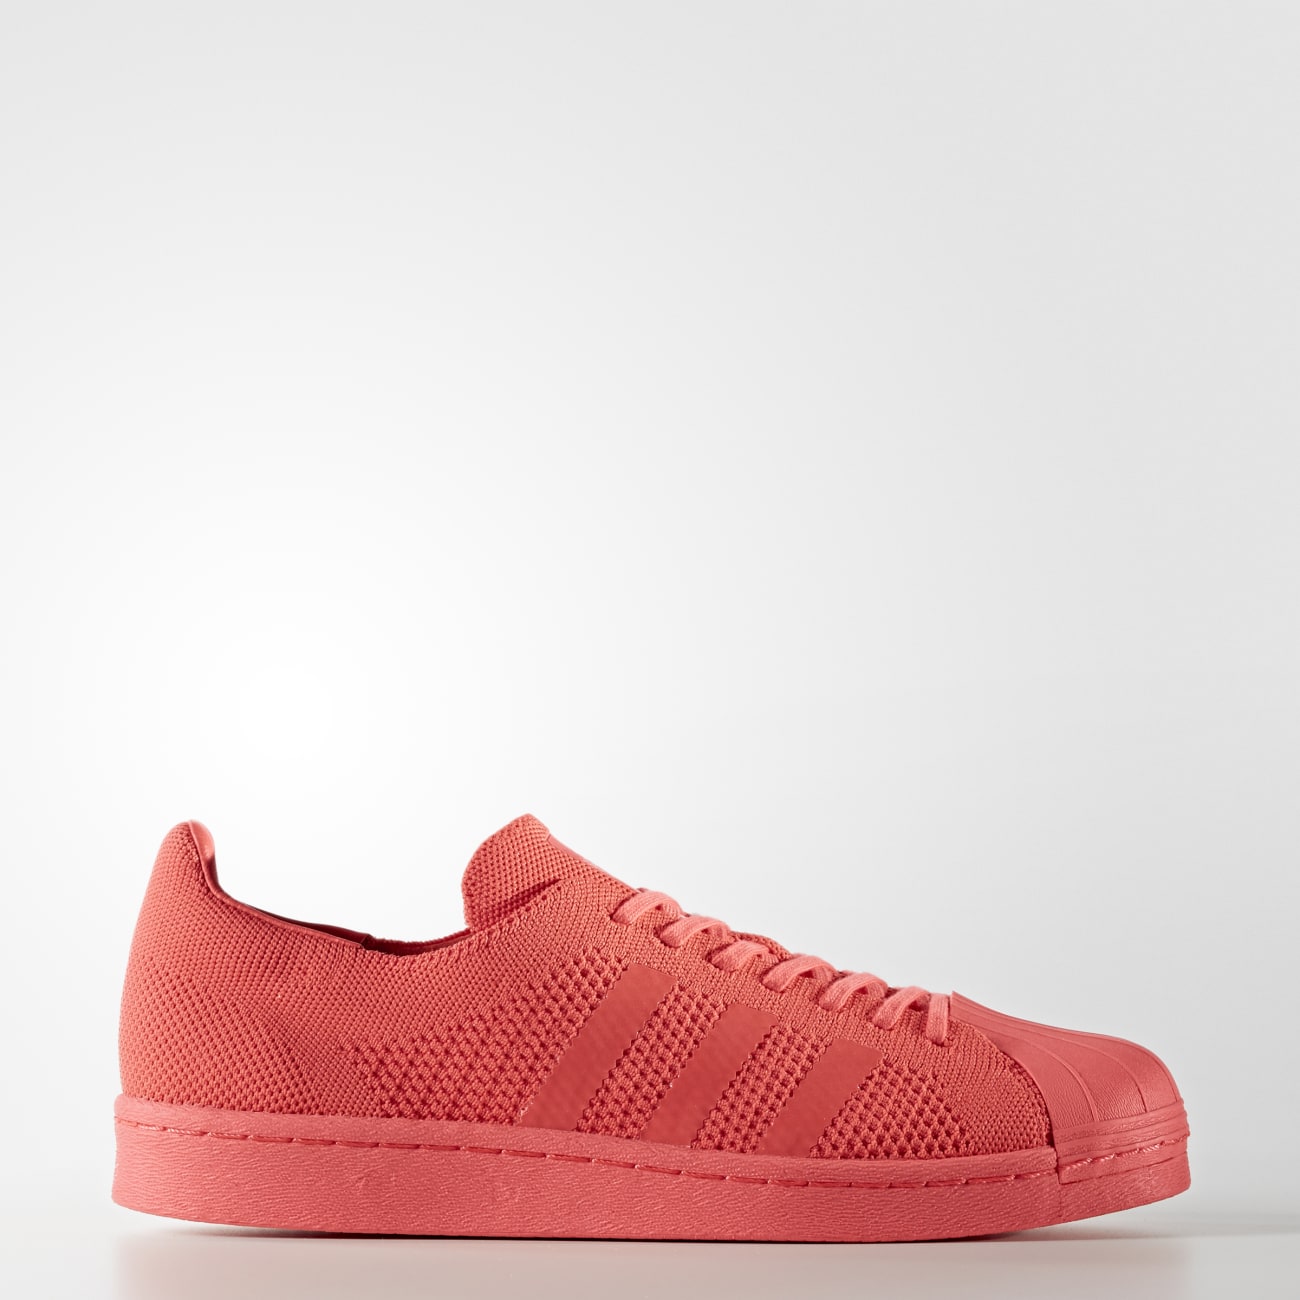 Adidas Superstar Boost Női Utcai Cipő - Narancssárga [D74388]